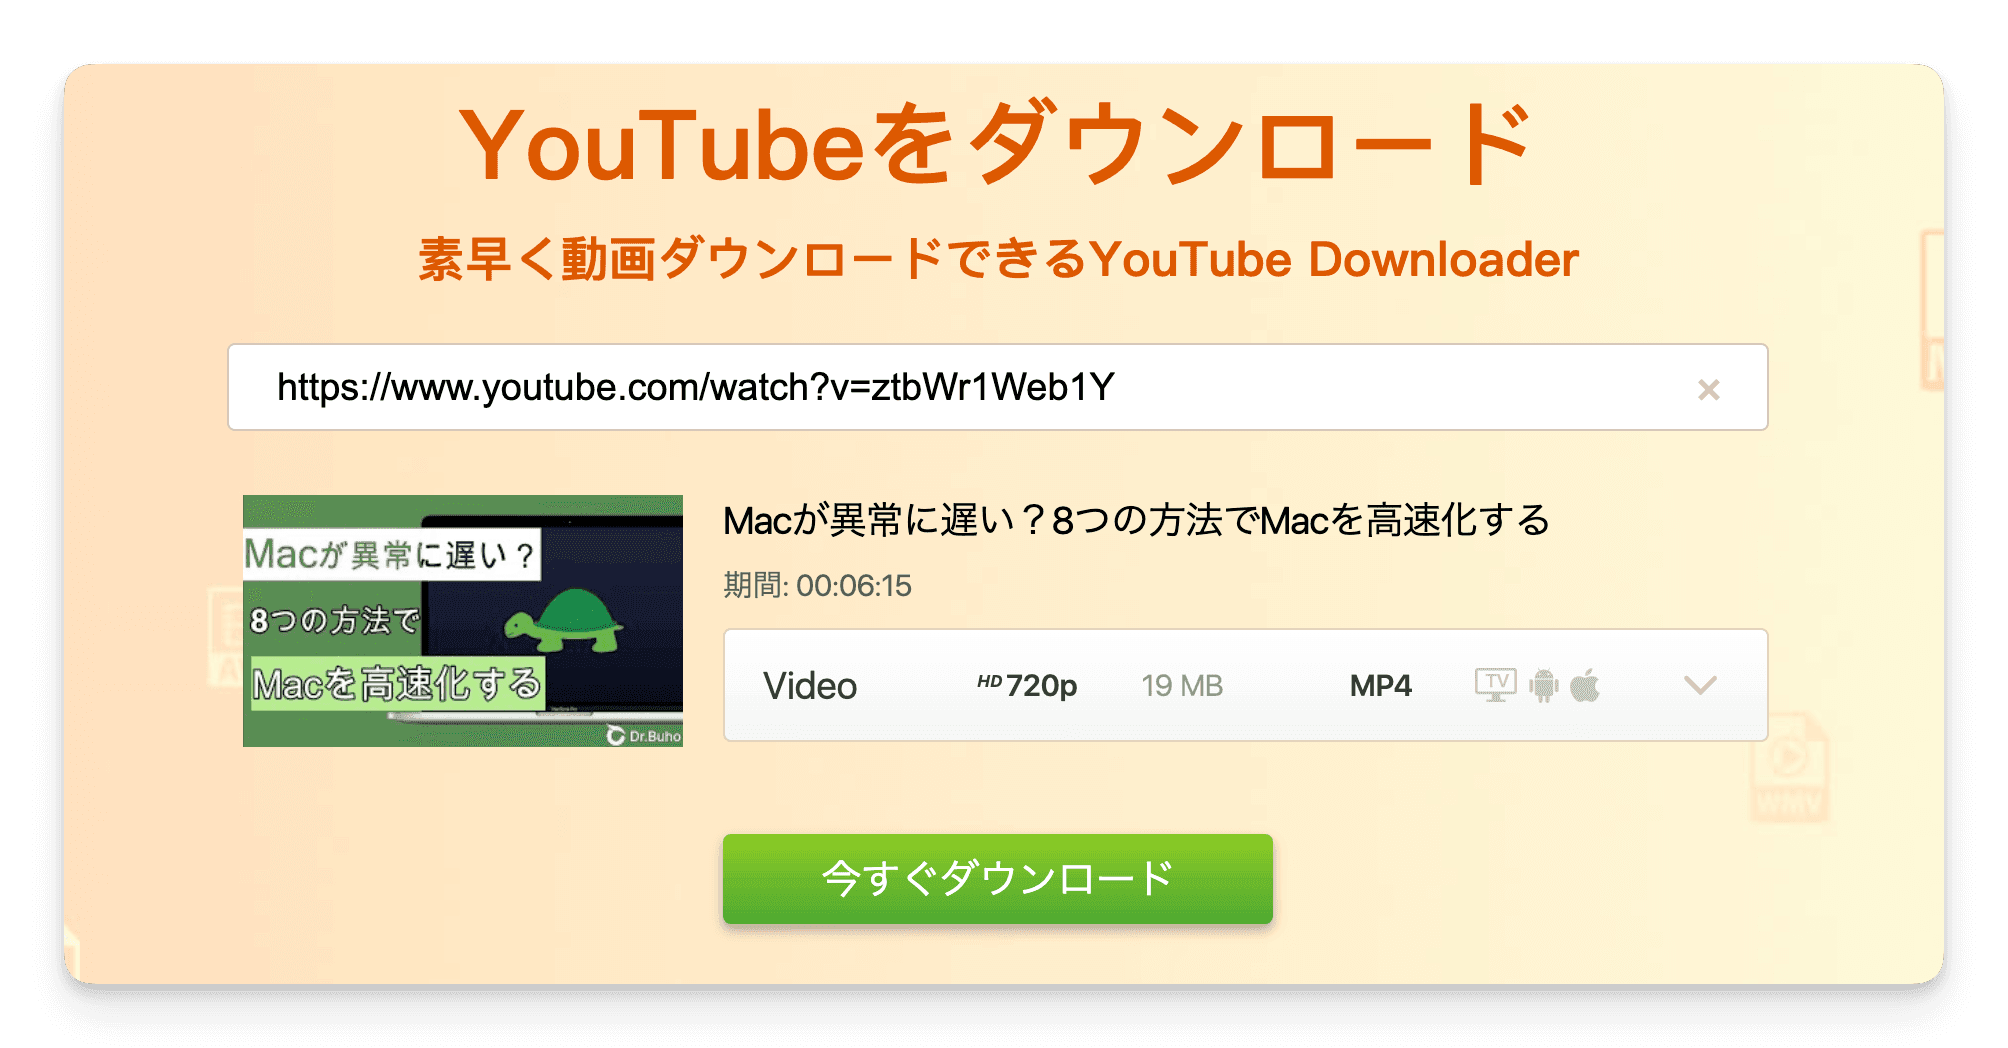 Freemake Video DownloaderでYouTube動画をMacにダウンロードす